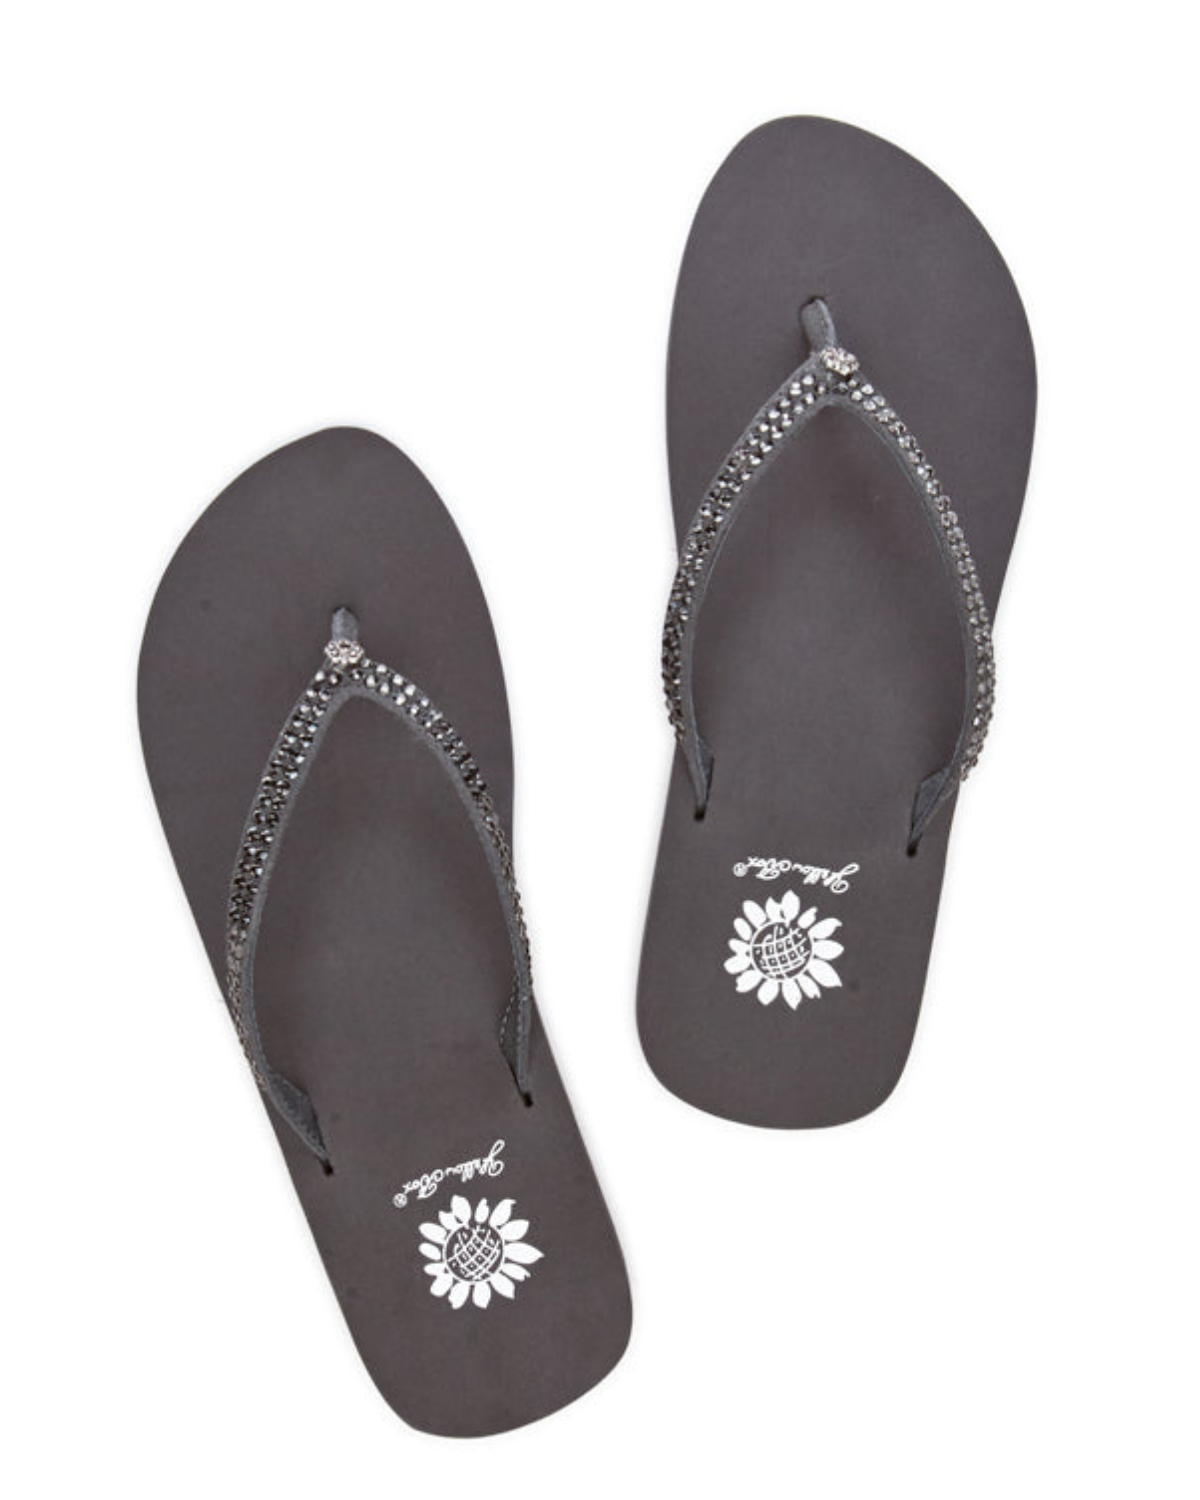 Women's grey wedge sandal with black rhinestones on the strap.